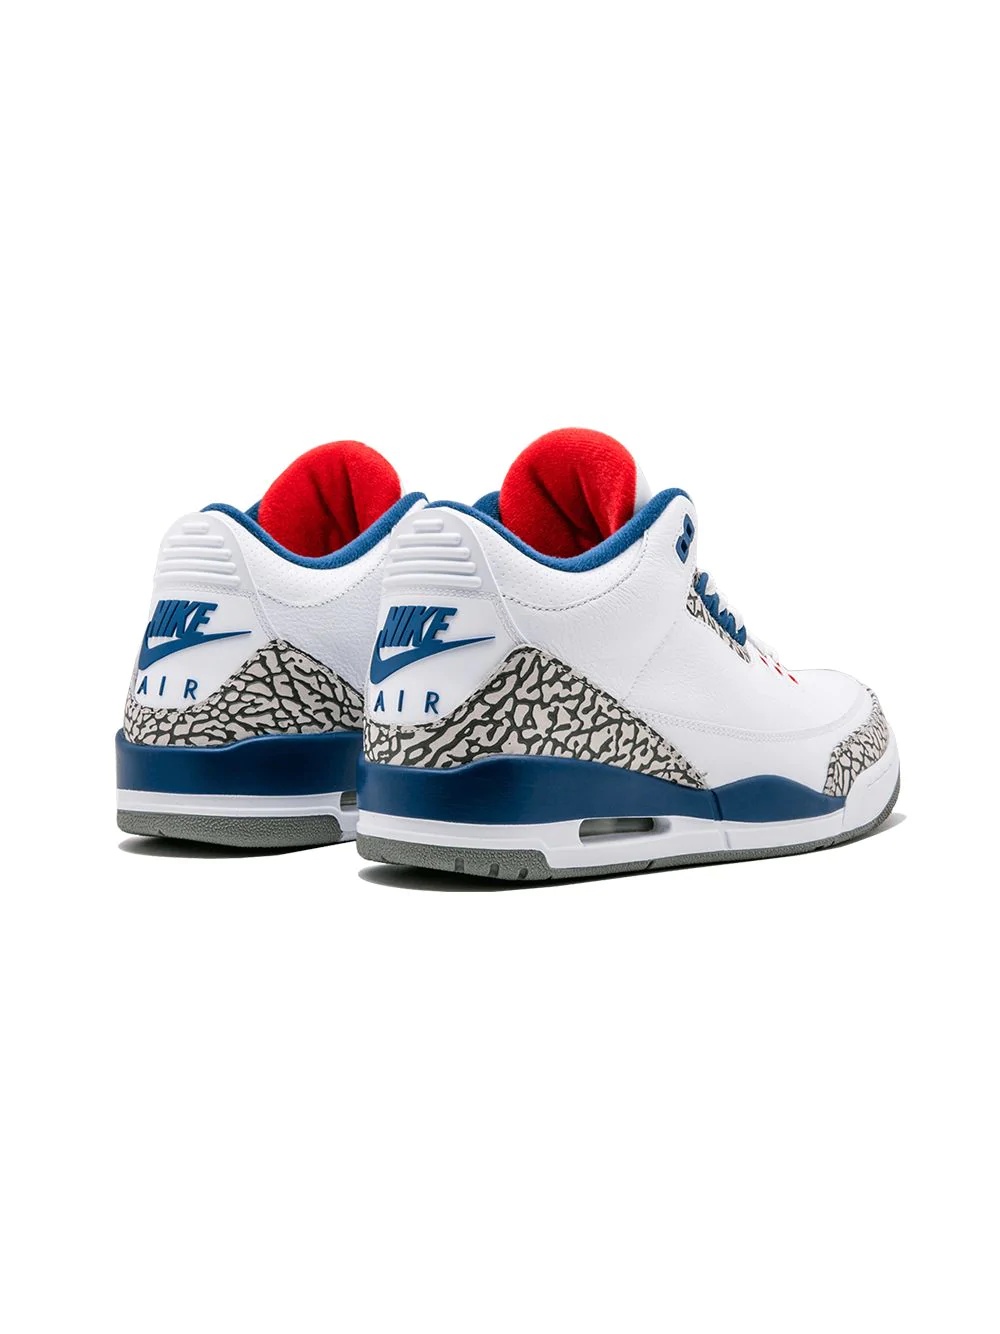 Air Jordan 3 Retro OG "True Blue" sneakers - 3